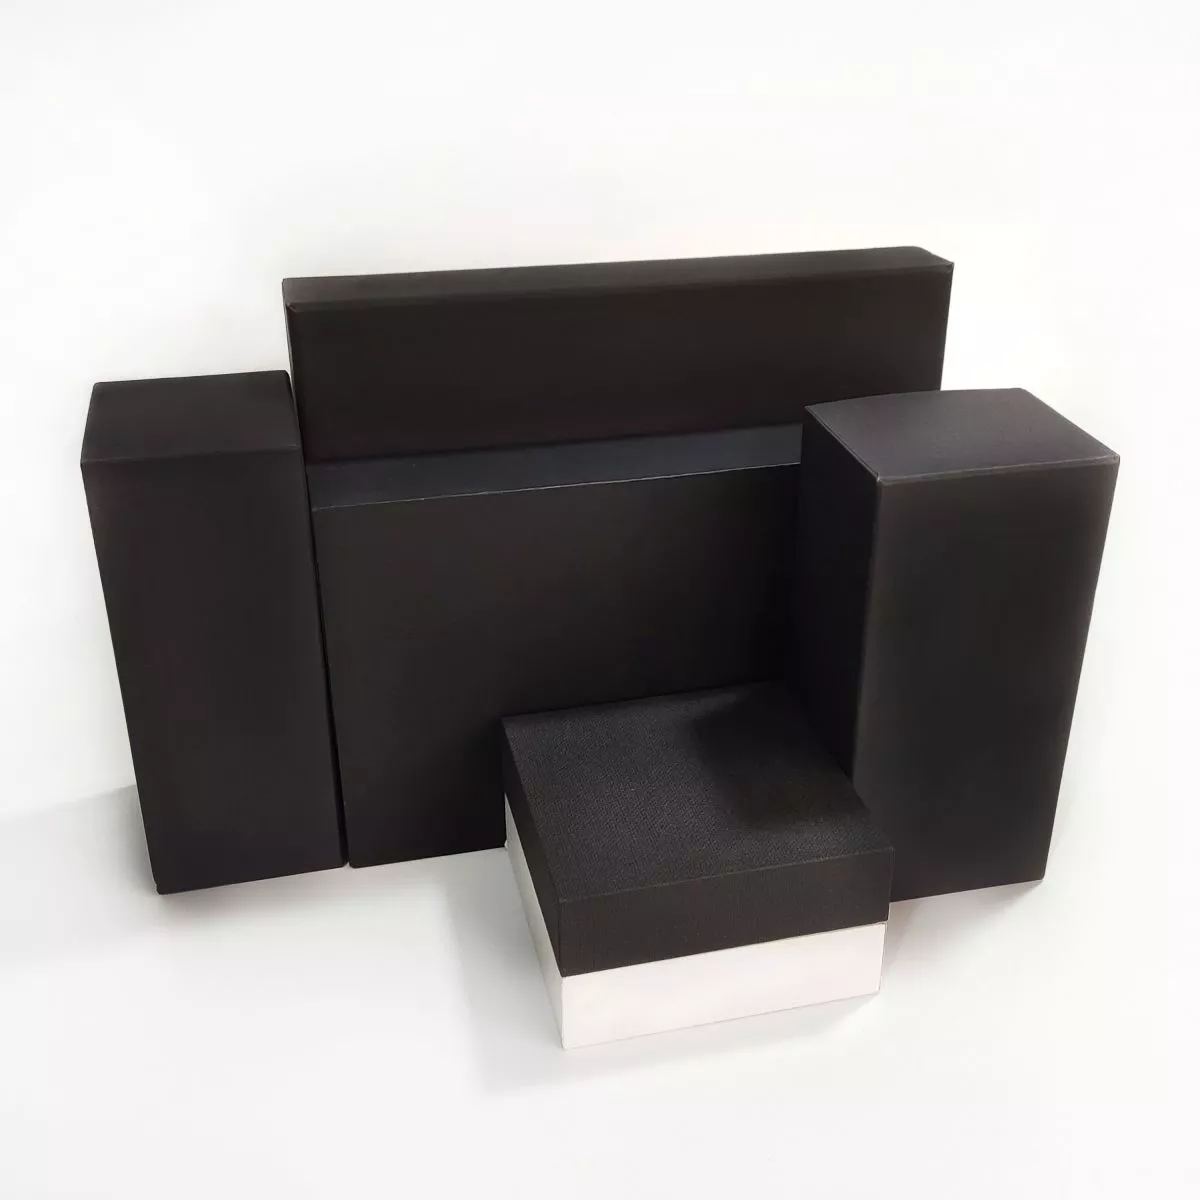 PB053 Hand Made Custom Packaging Box By Individual Dimensions